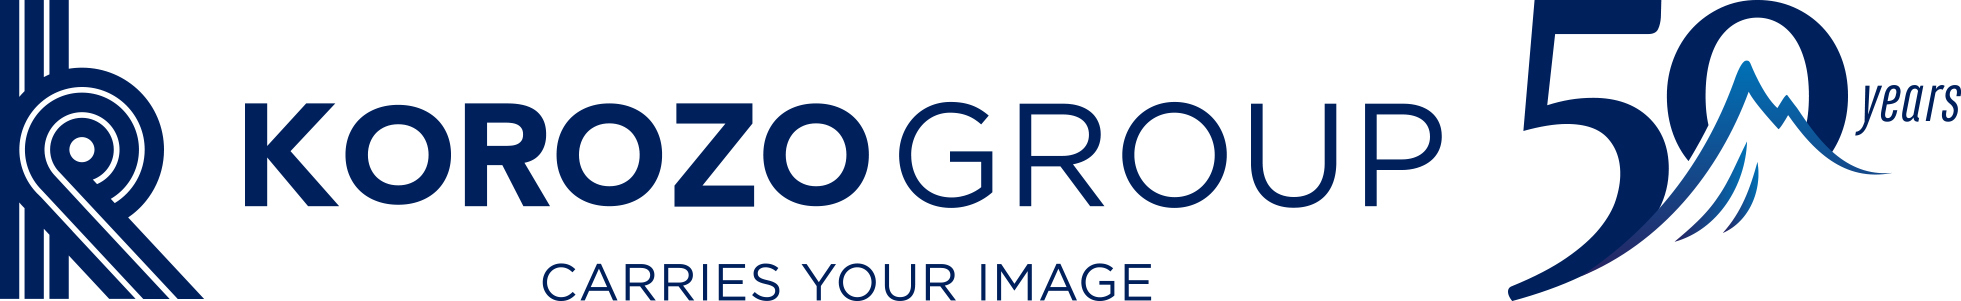 korozo group logo